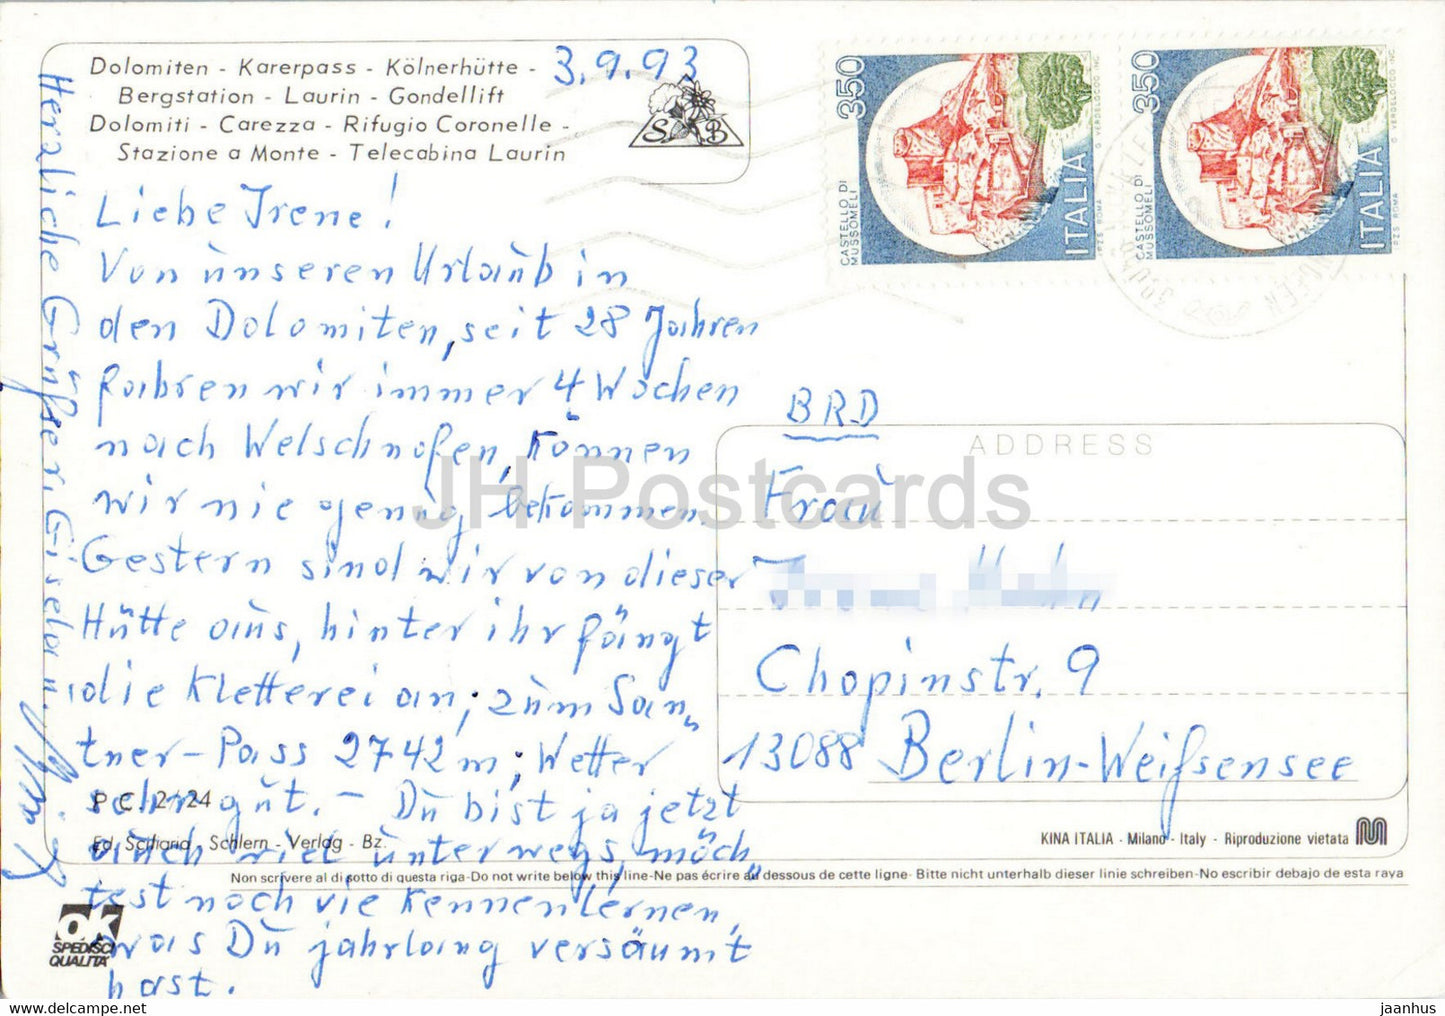 Dolomiten - Karerpass - Kölnerhütte - Bergstation - Gondellift - Carezza - Rifugio Coronelle - 1993 - Italien - gebraucht